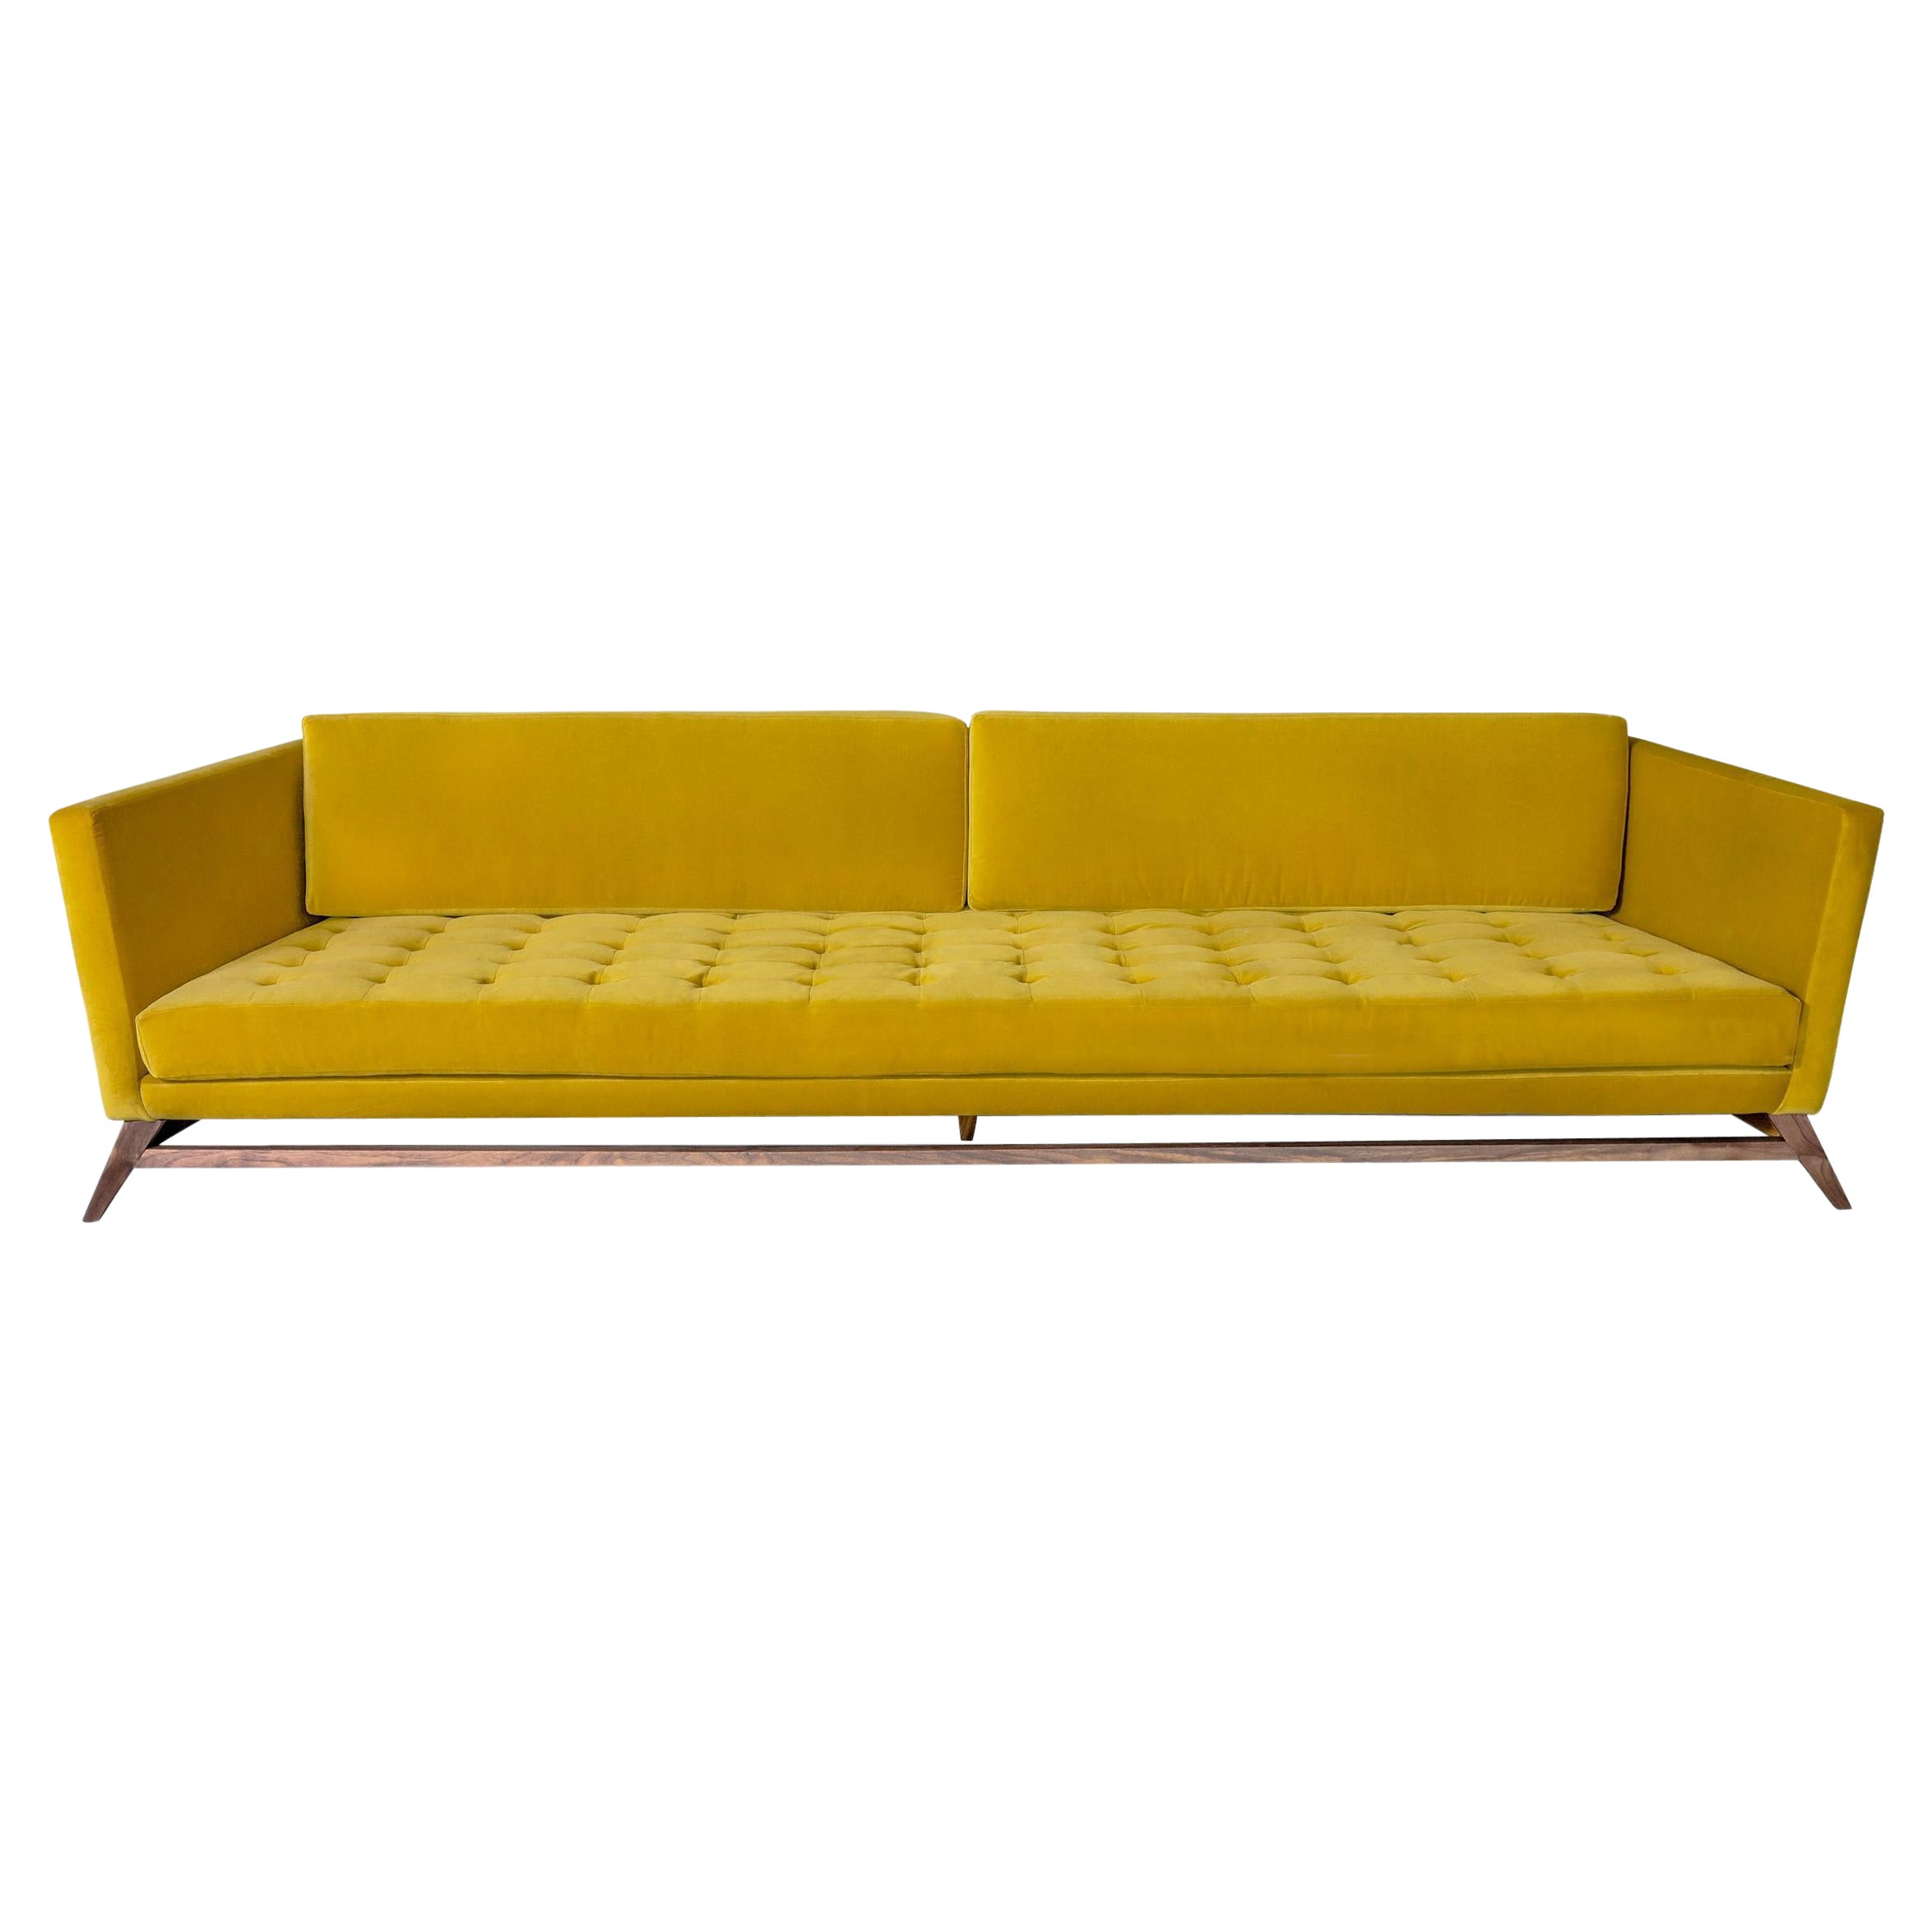 Canapé jaune Eclipse d'Atra Design en vente